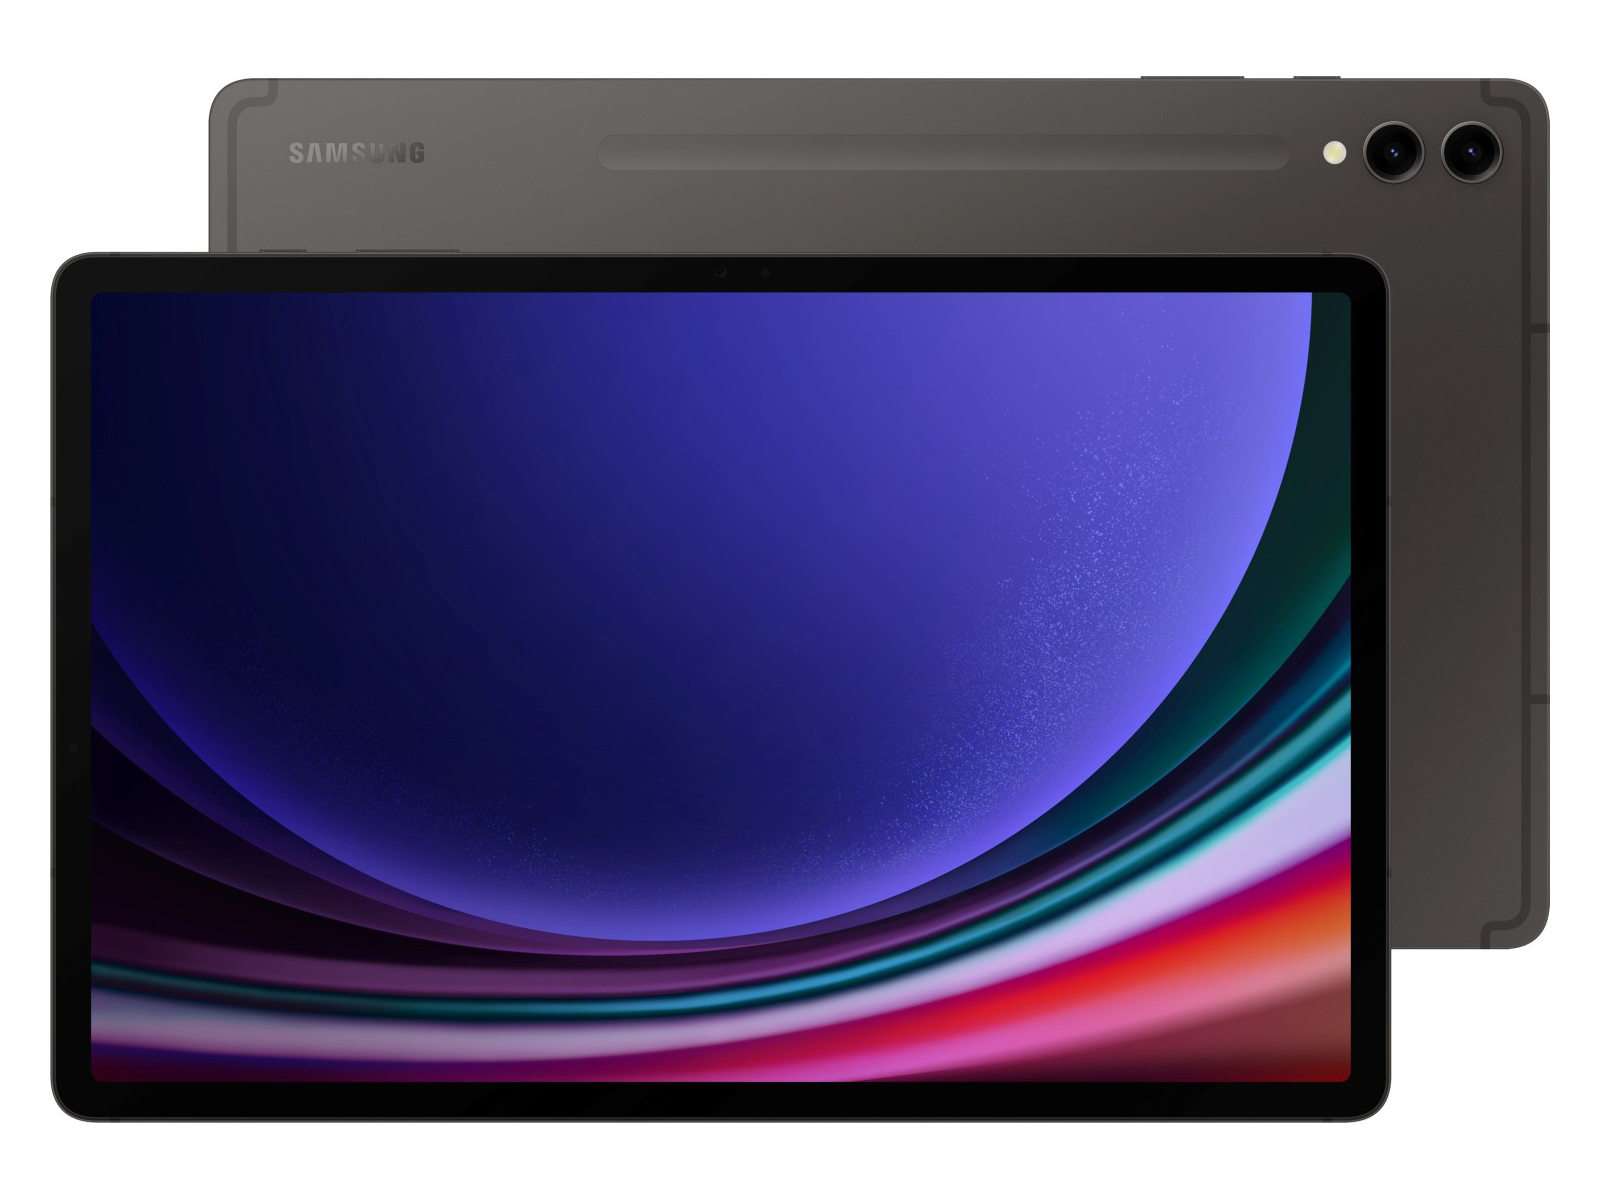 Samsung lance un « iPad mini killer », mi-tablette mi-téléphone